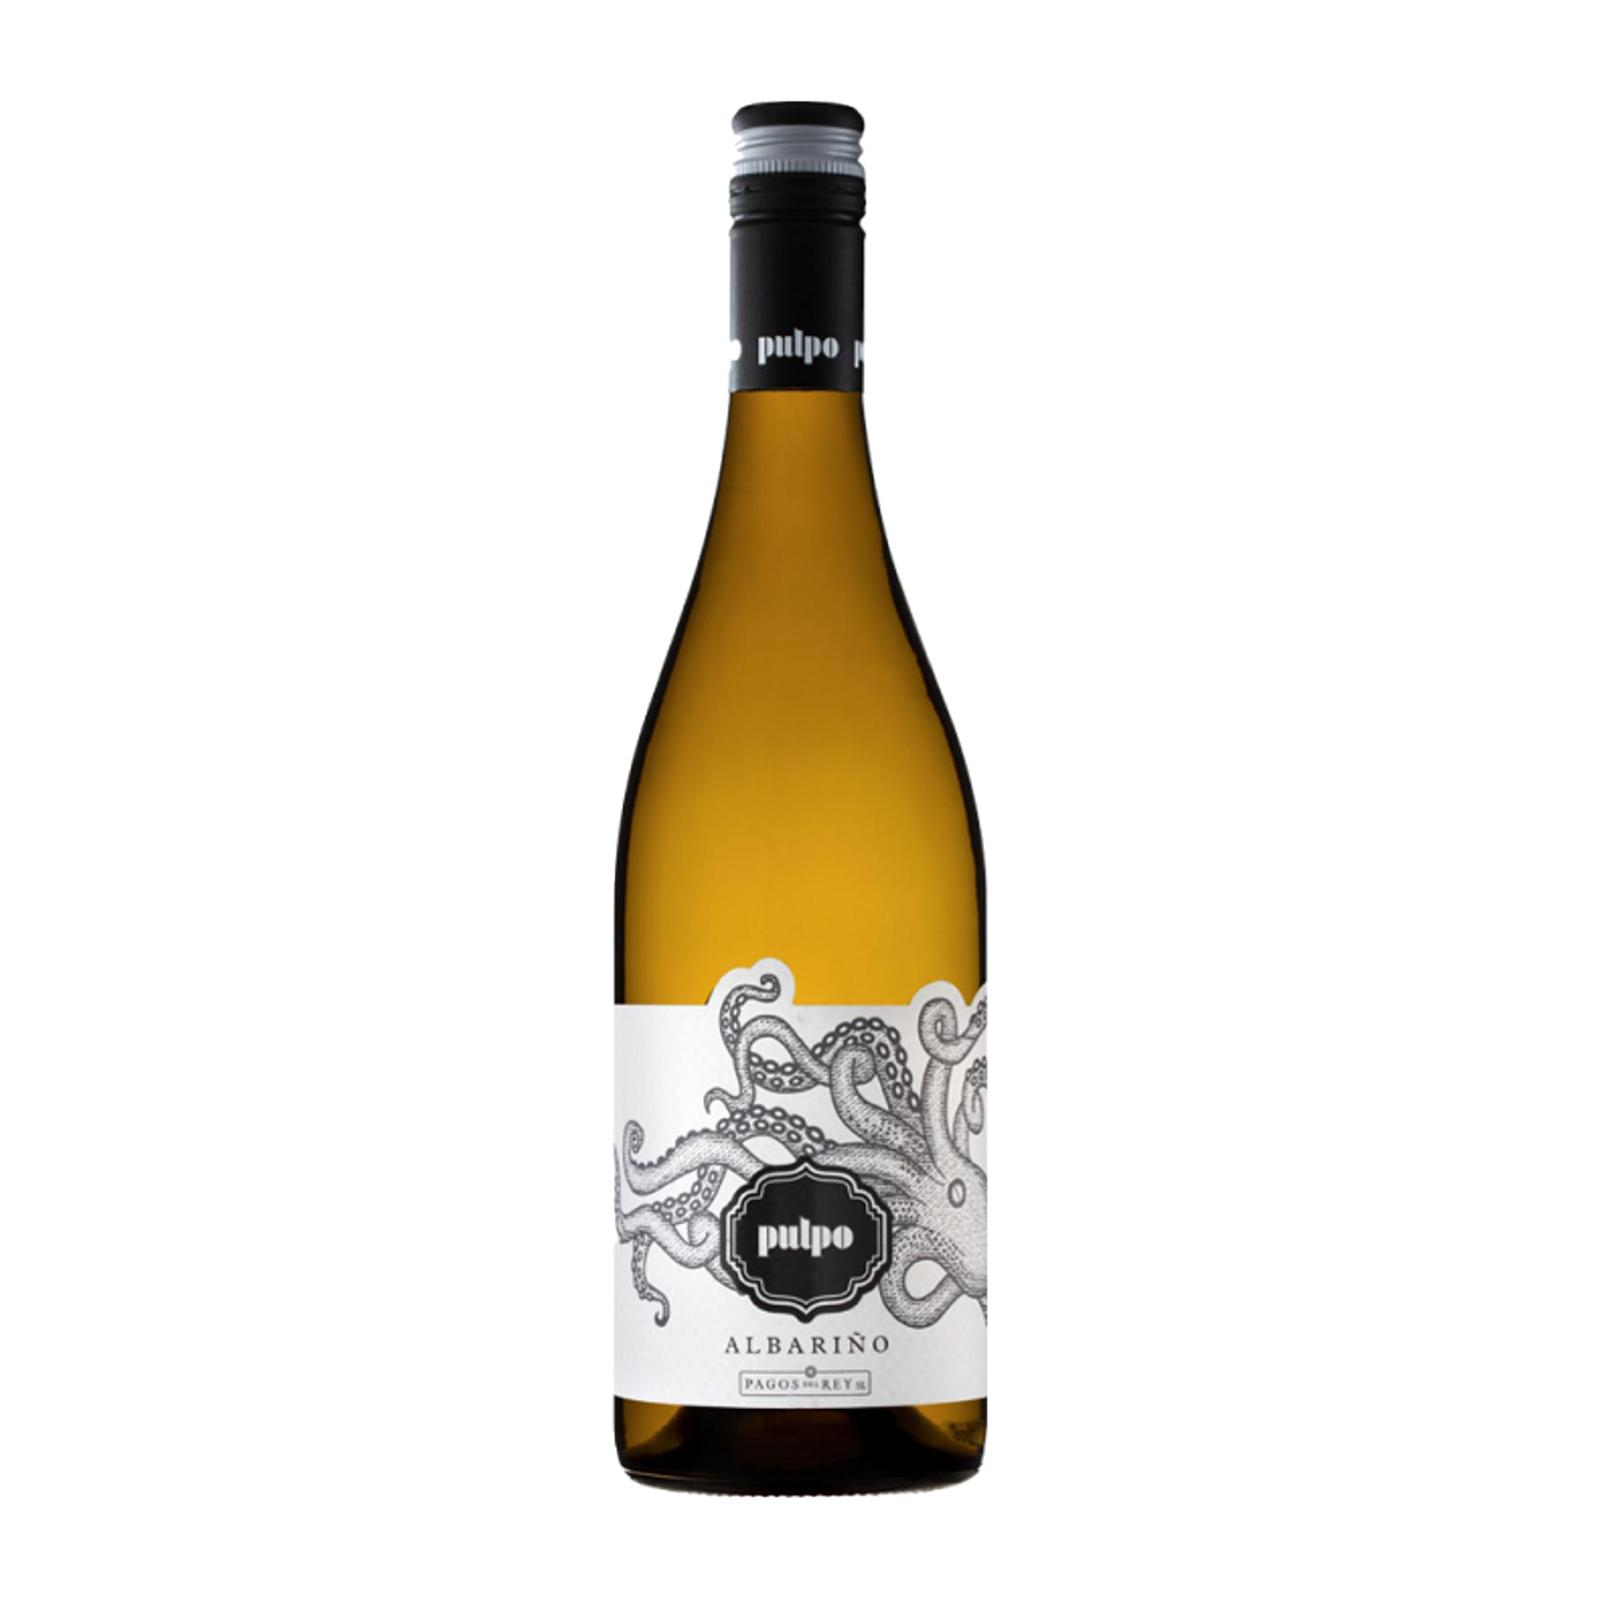 Pulpo Albarino 2020 White Wine – Rias Baixas, Spain